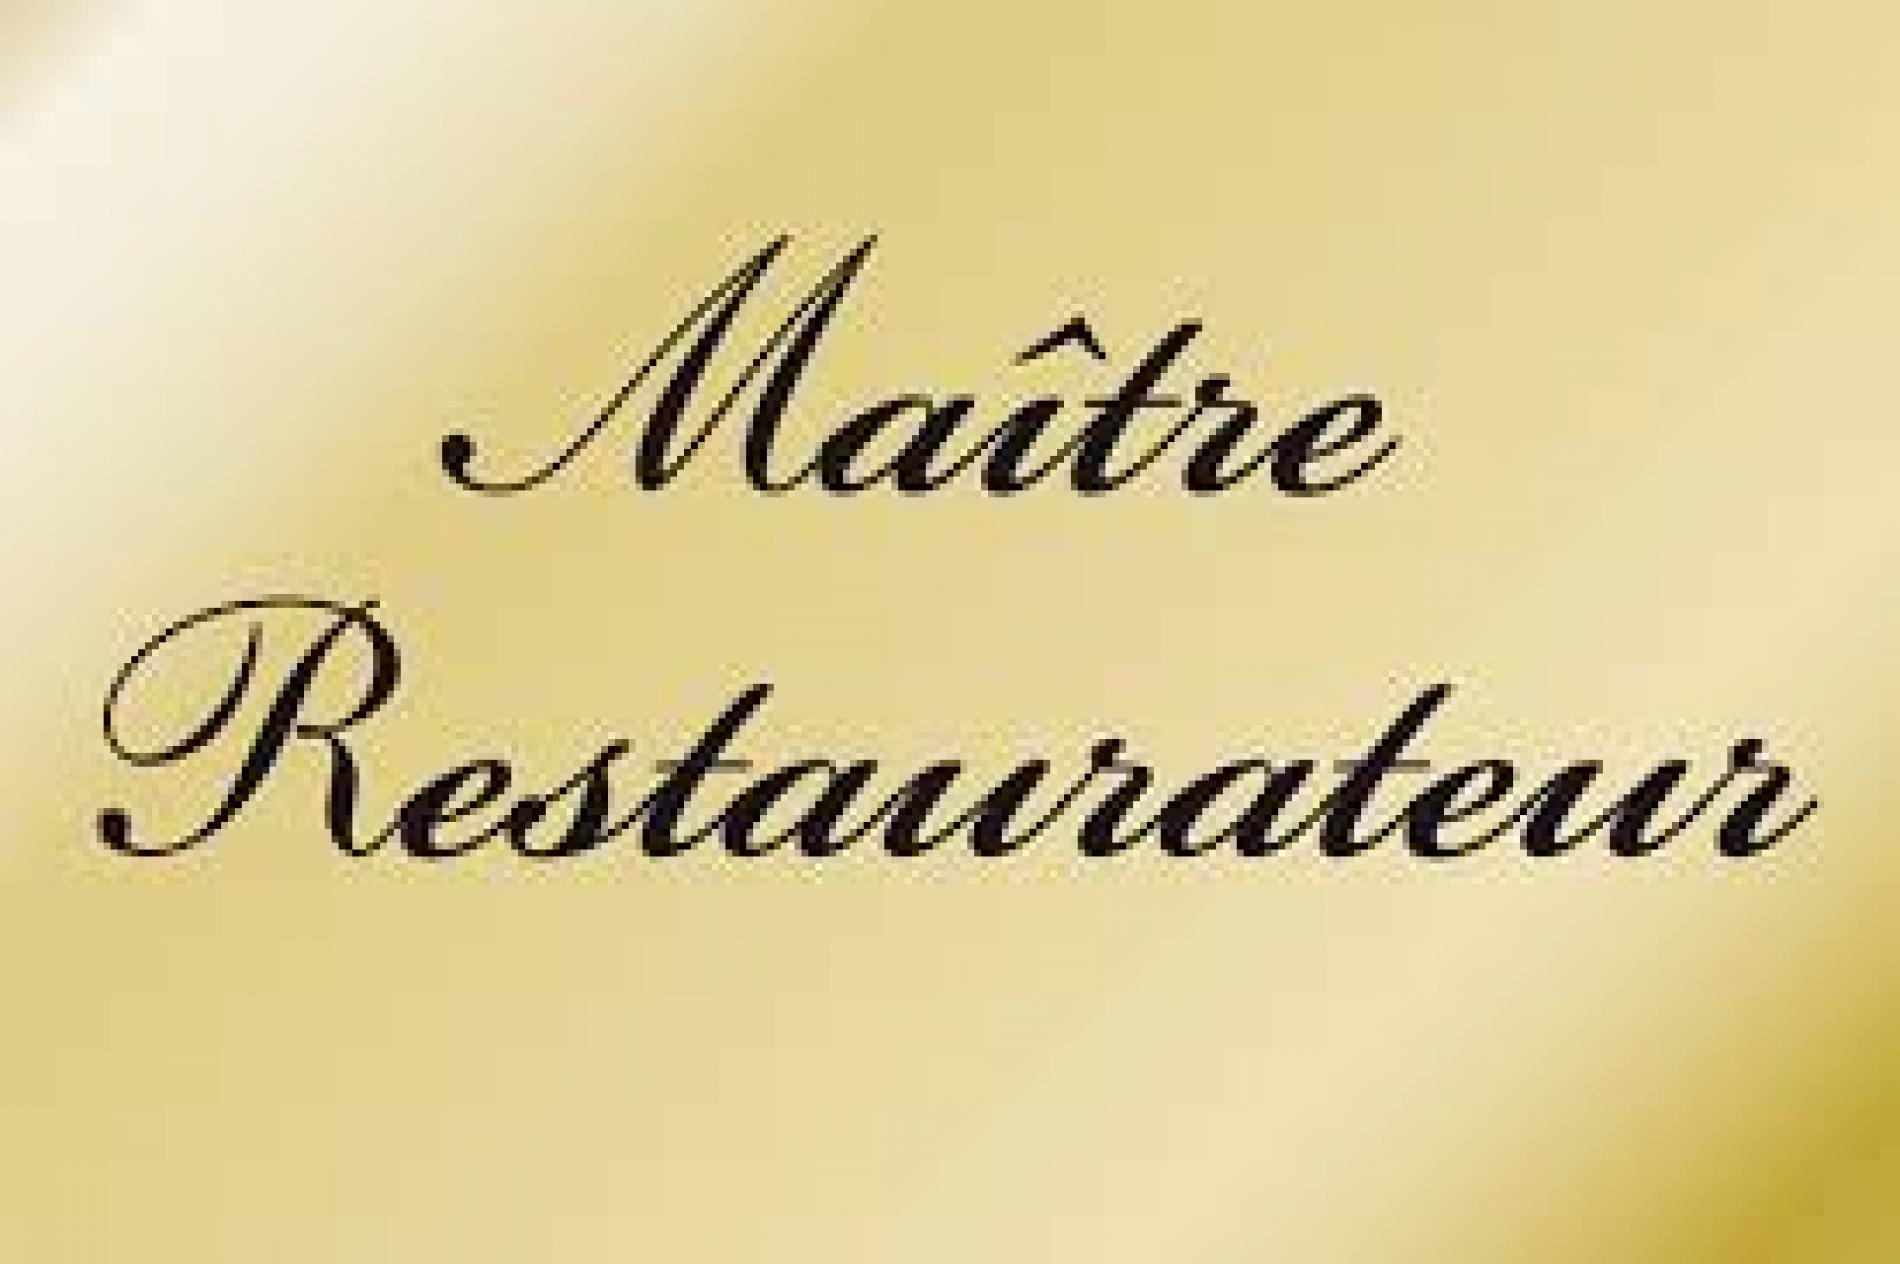 Logo maître restaurateur